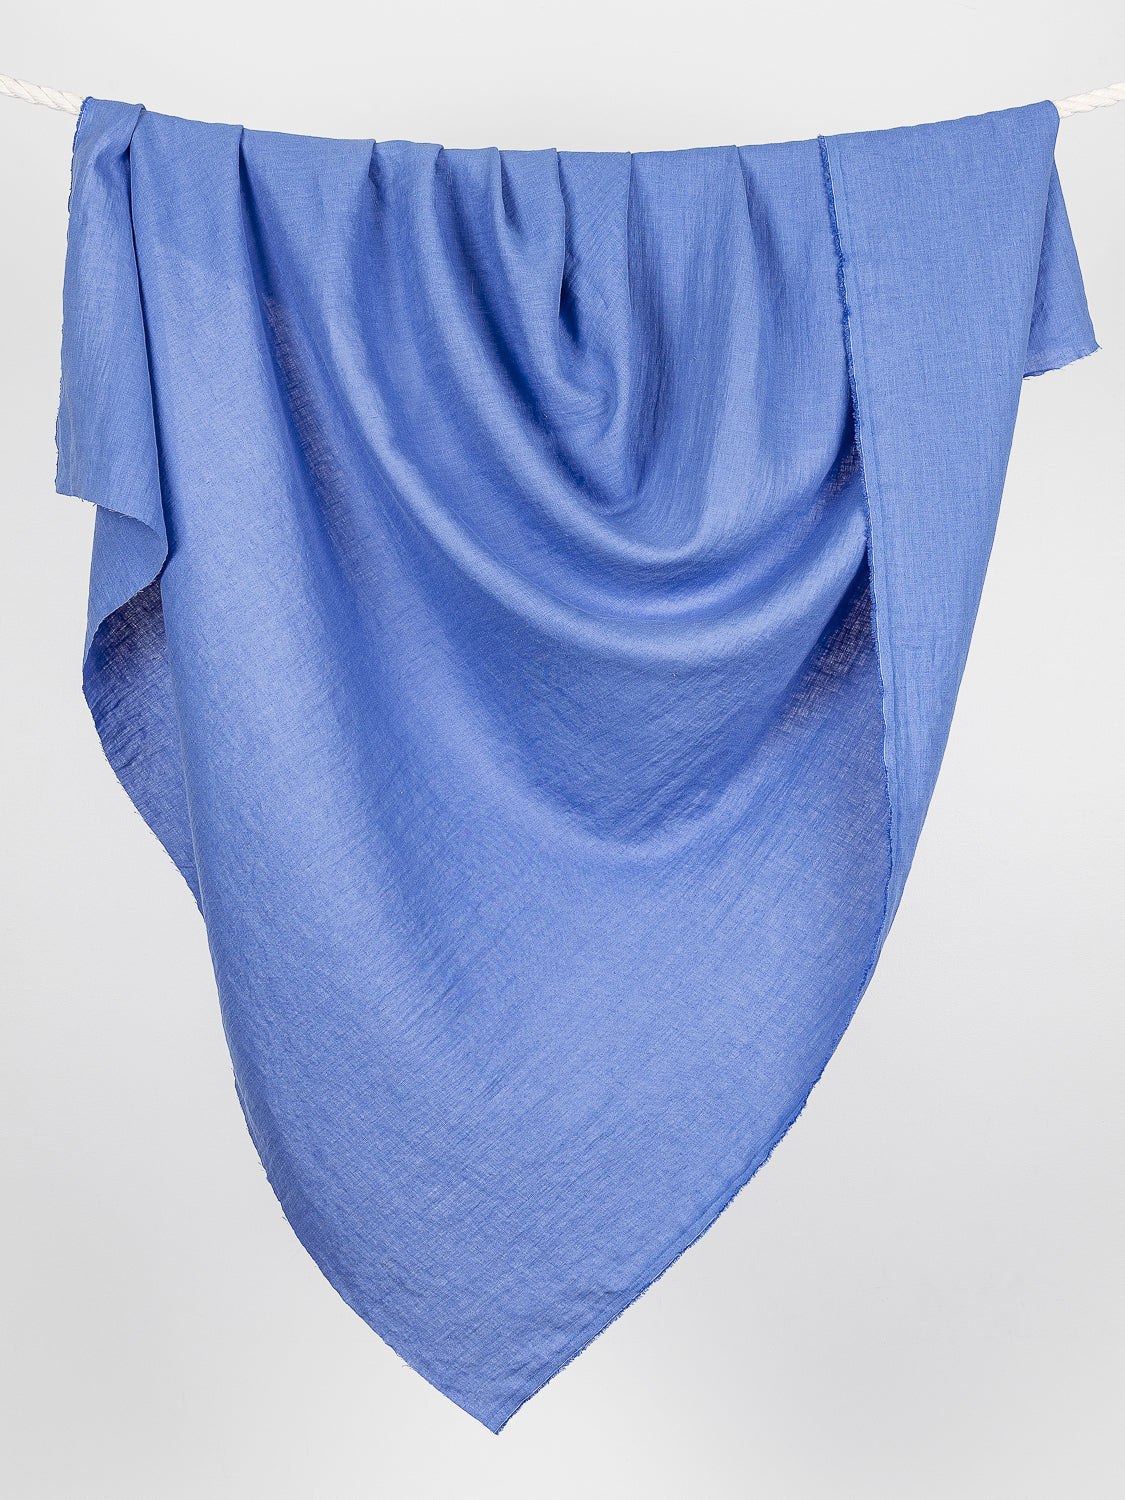 Midweight European Linen - Periwinkle Blue | Core Fabrics